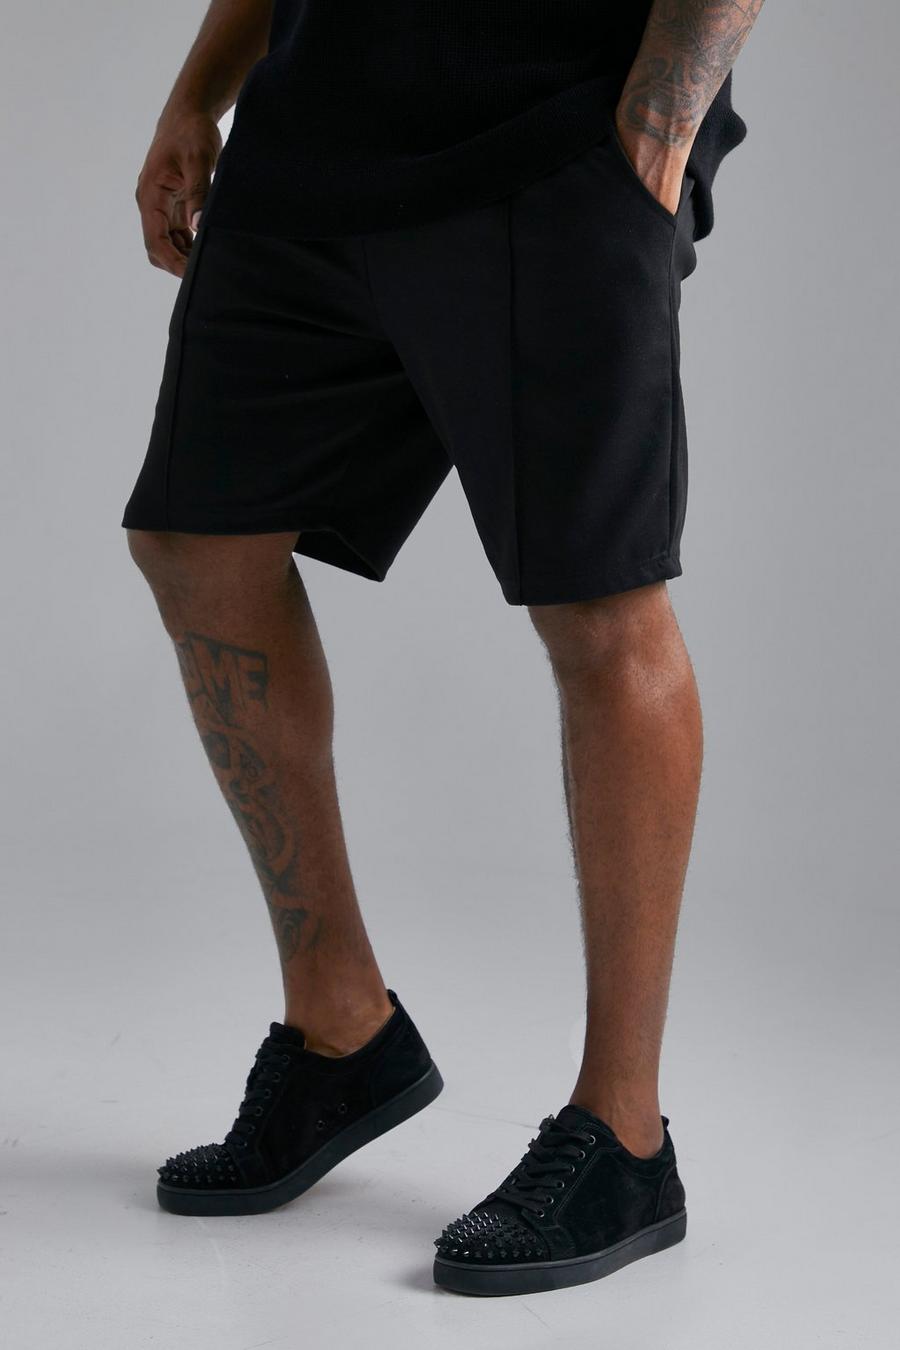 Pantaloncini Smart Plus Size Slim Fit con nervature, Black nero